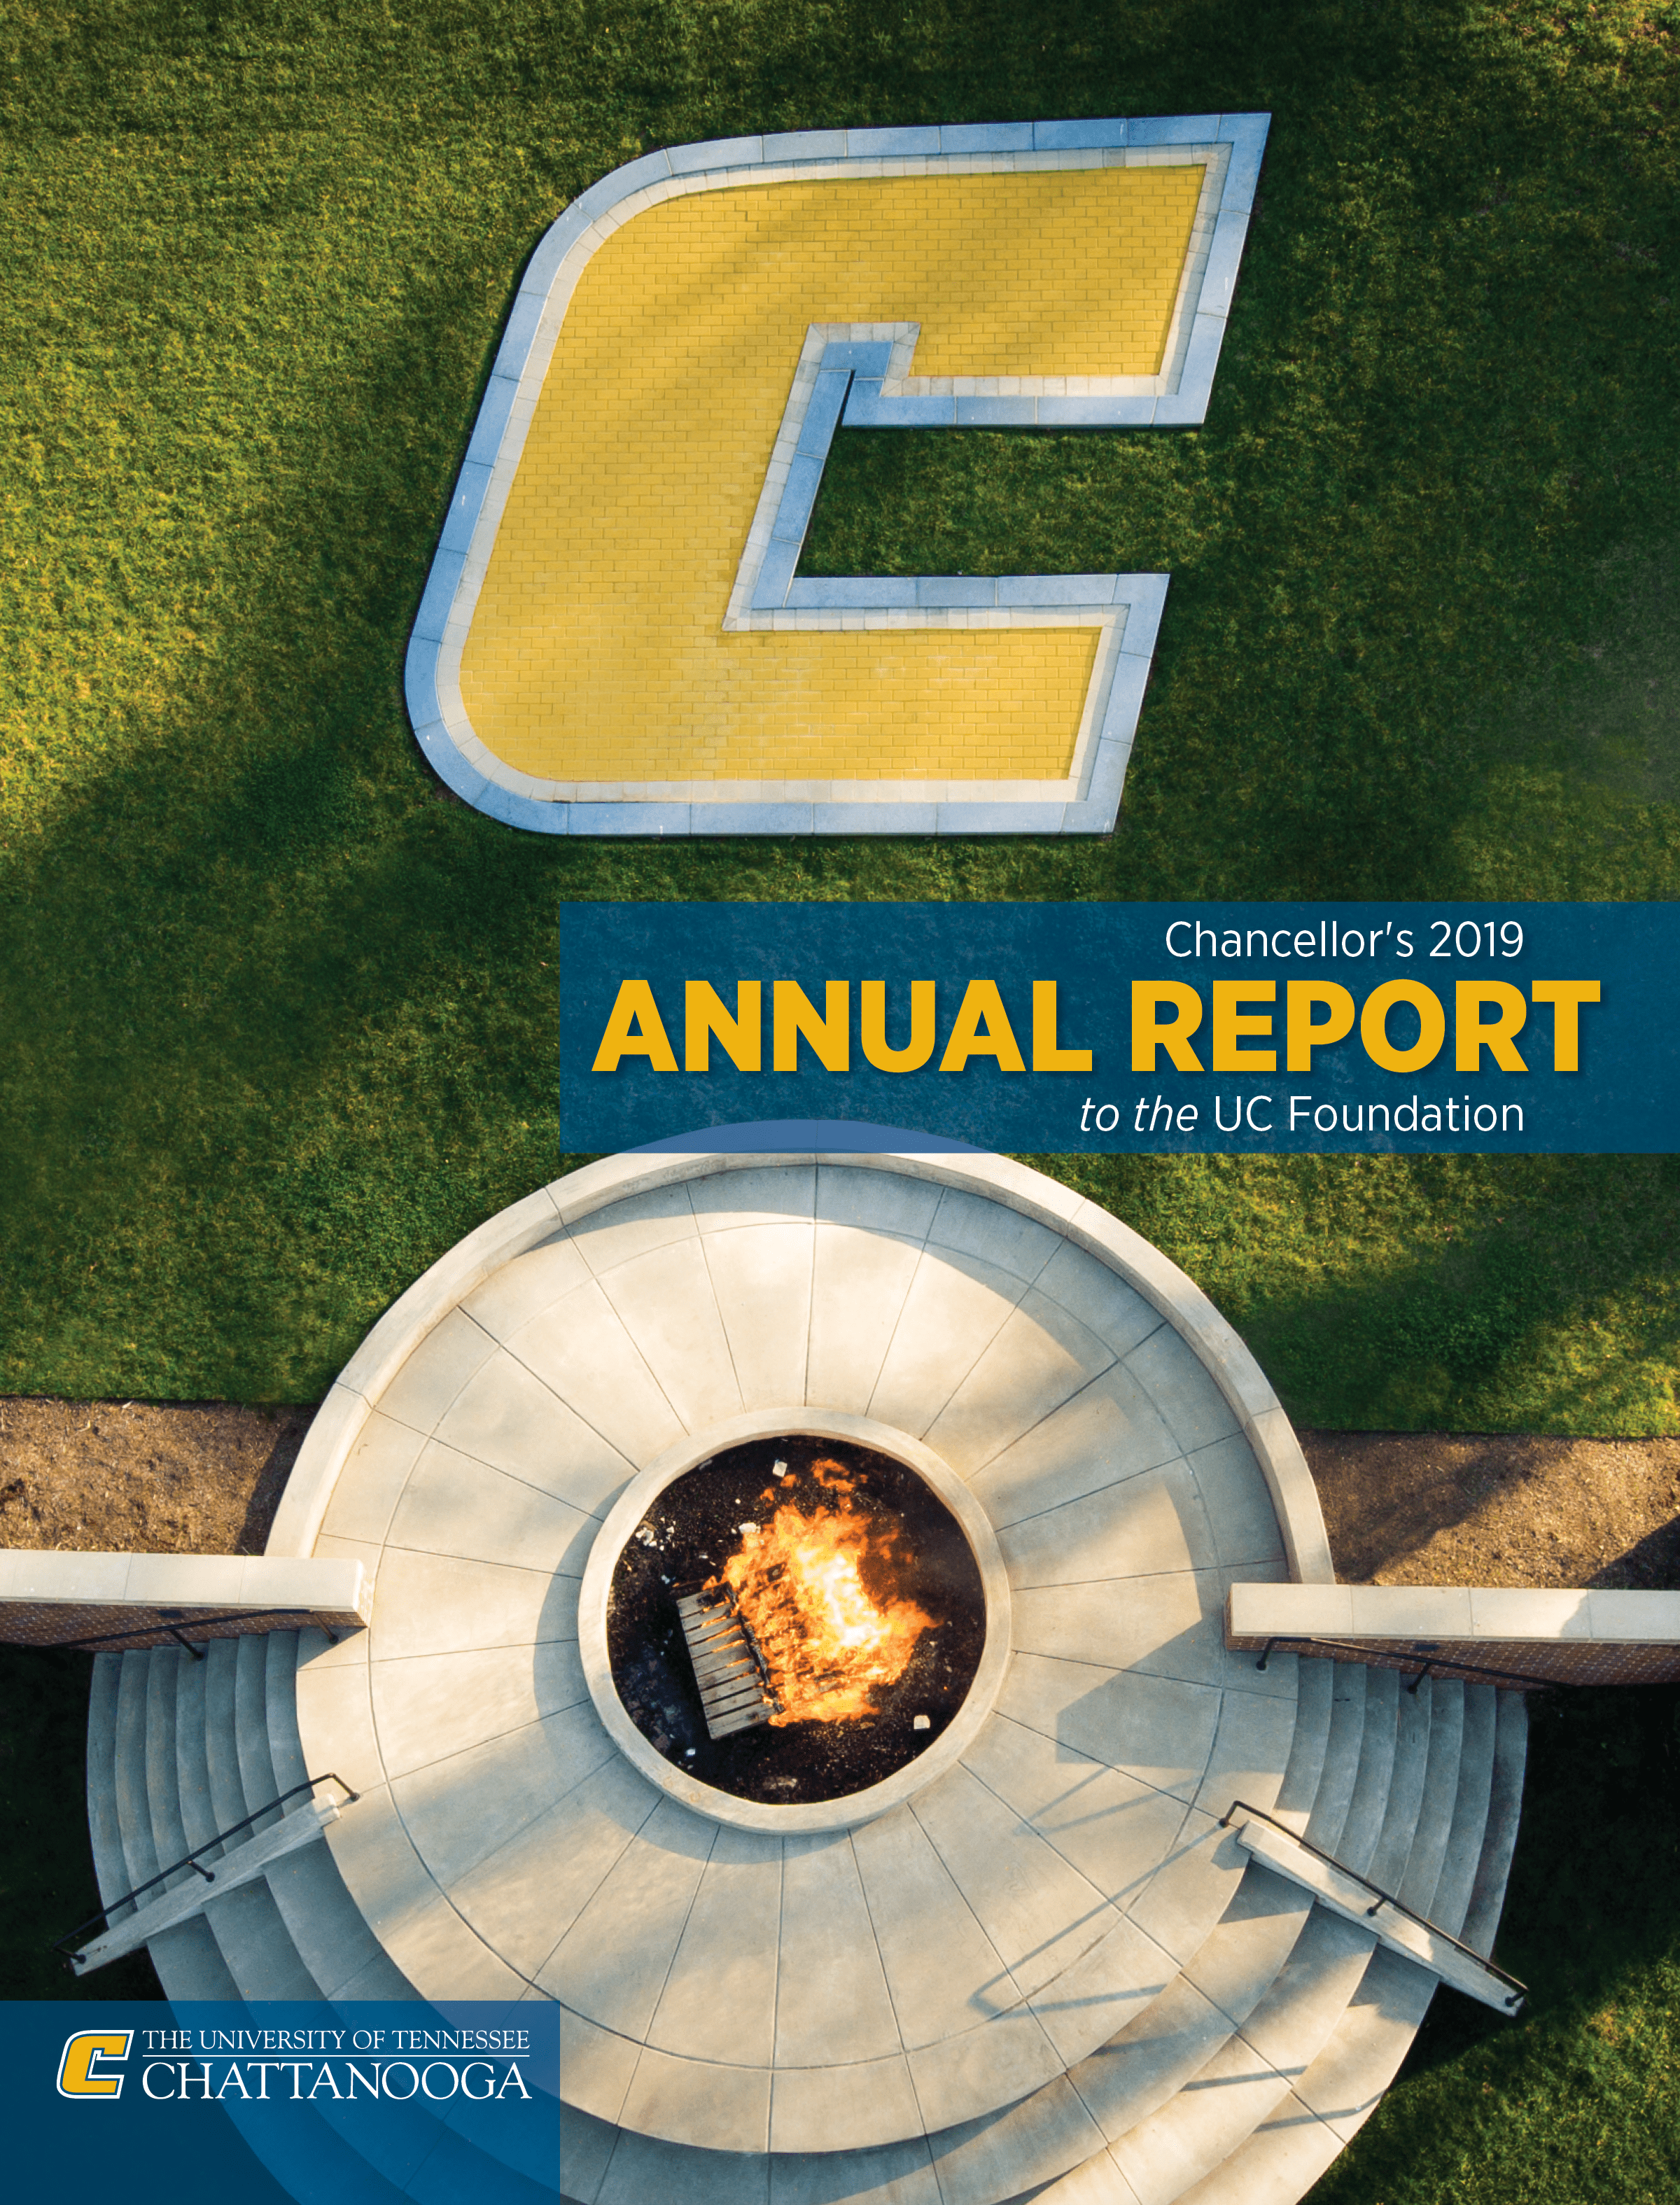 UTC Chancellor's Annual Report to UC Foundation